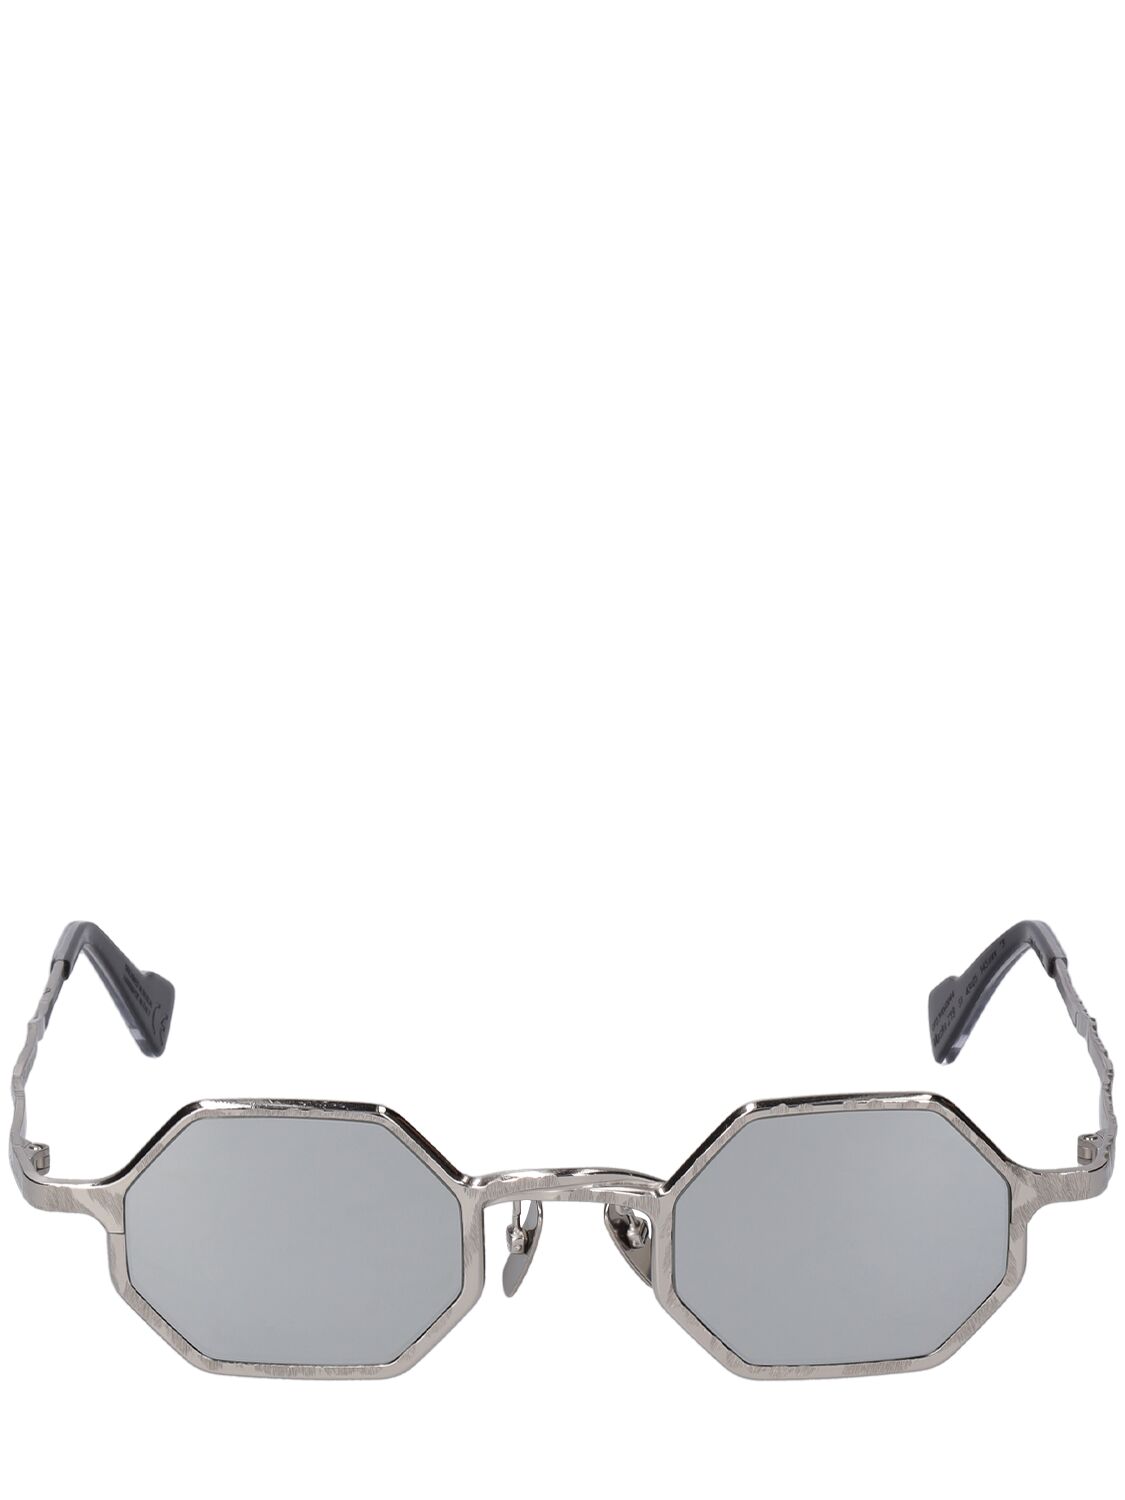 Kuboraum Berlin Z19 Squared Metal Sunglasses In Silver